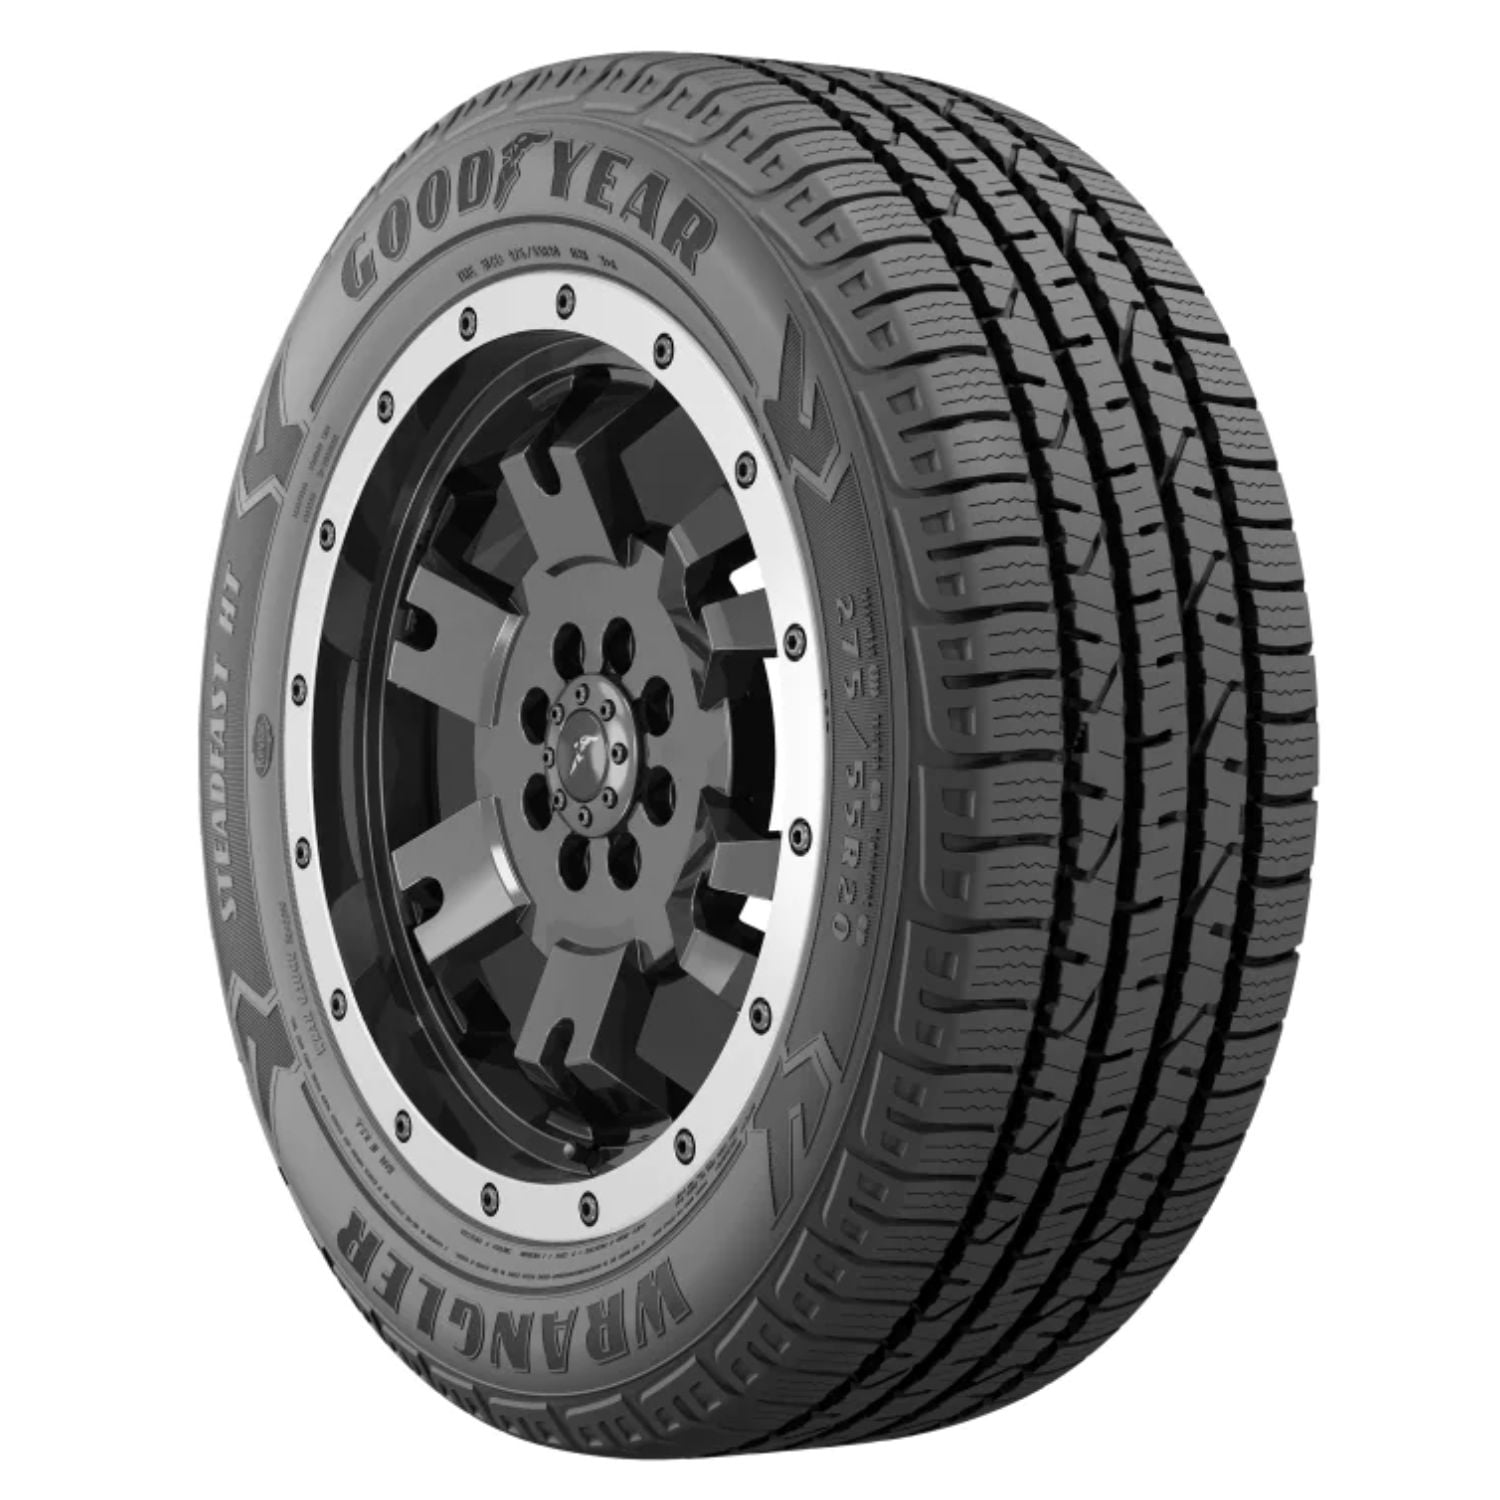 Goodyear Wrangler Steadfast HT All Season 275/55R20 113H Light Truck Tire -  